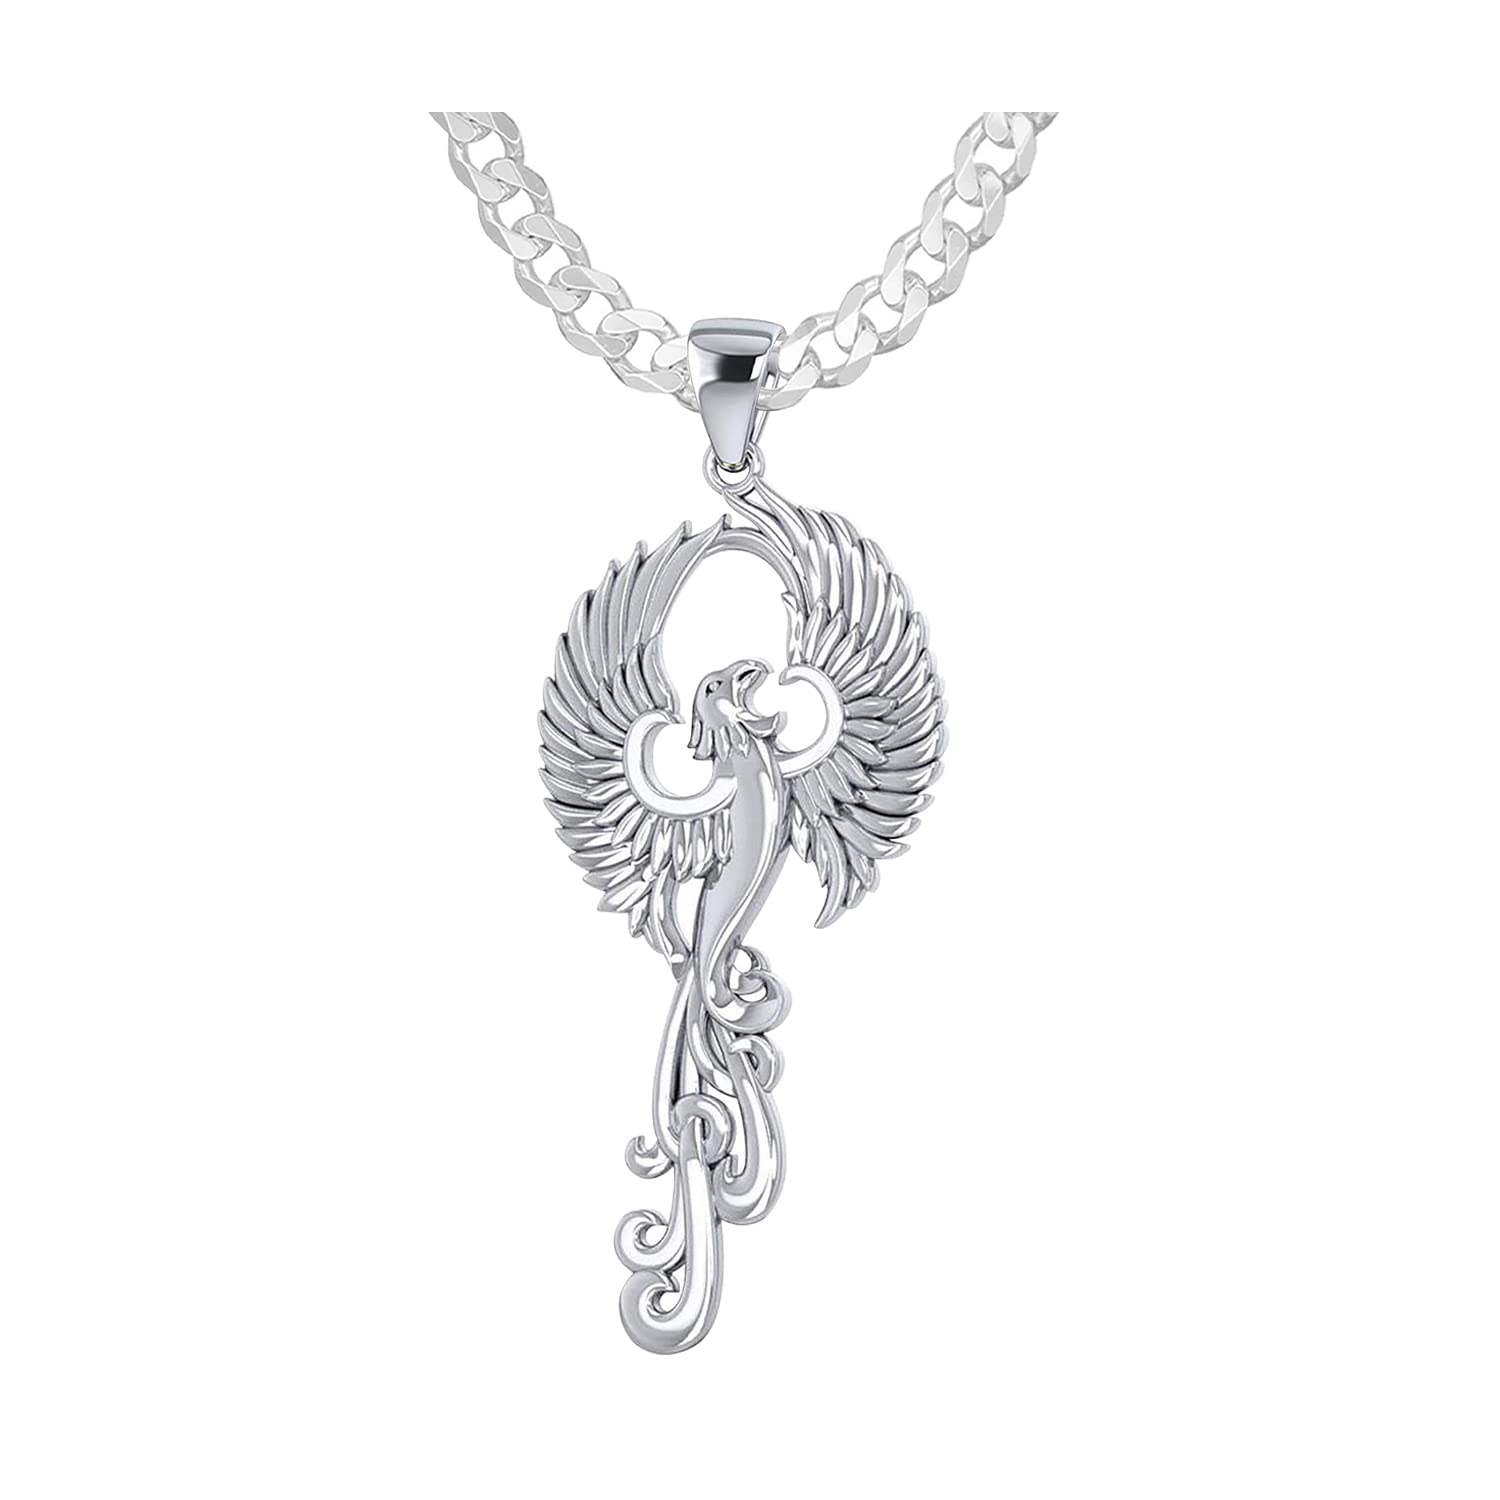 New 3 Tone Sterling Silver Phoenix Pendant & Chain Necklace